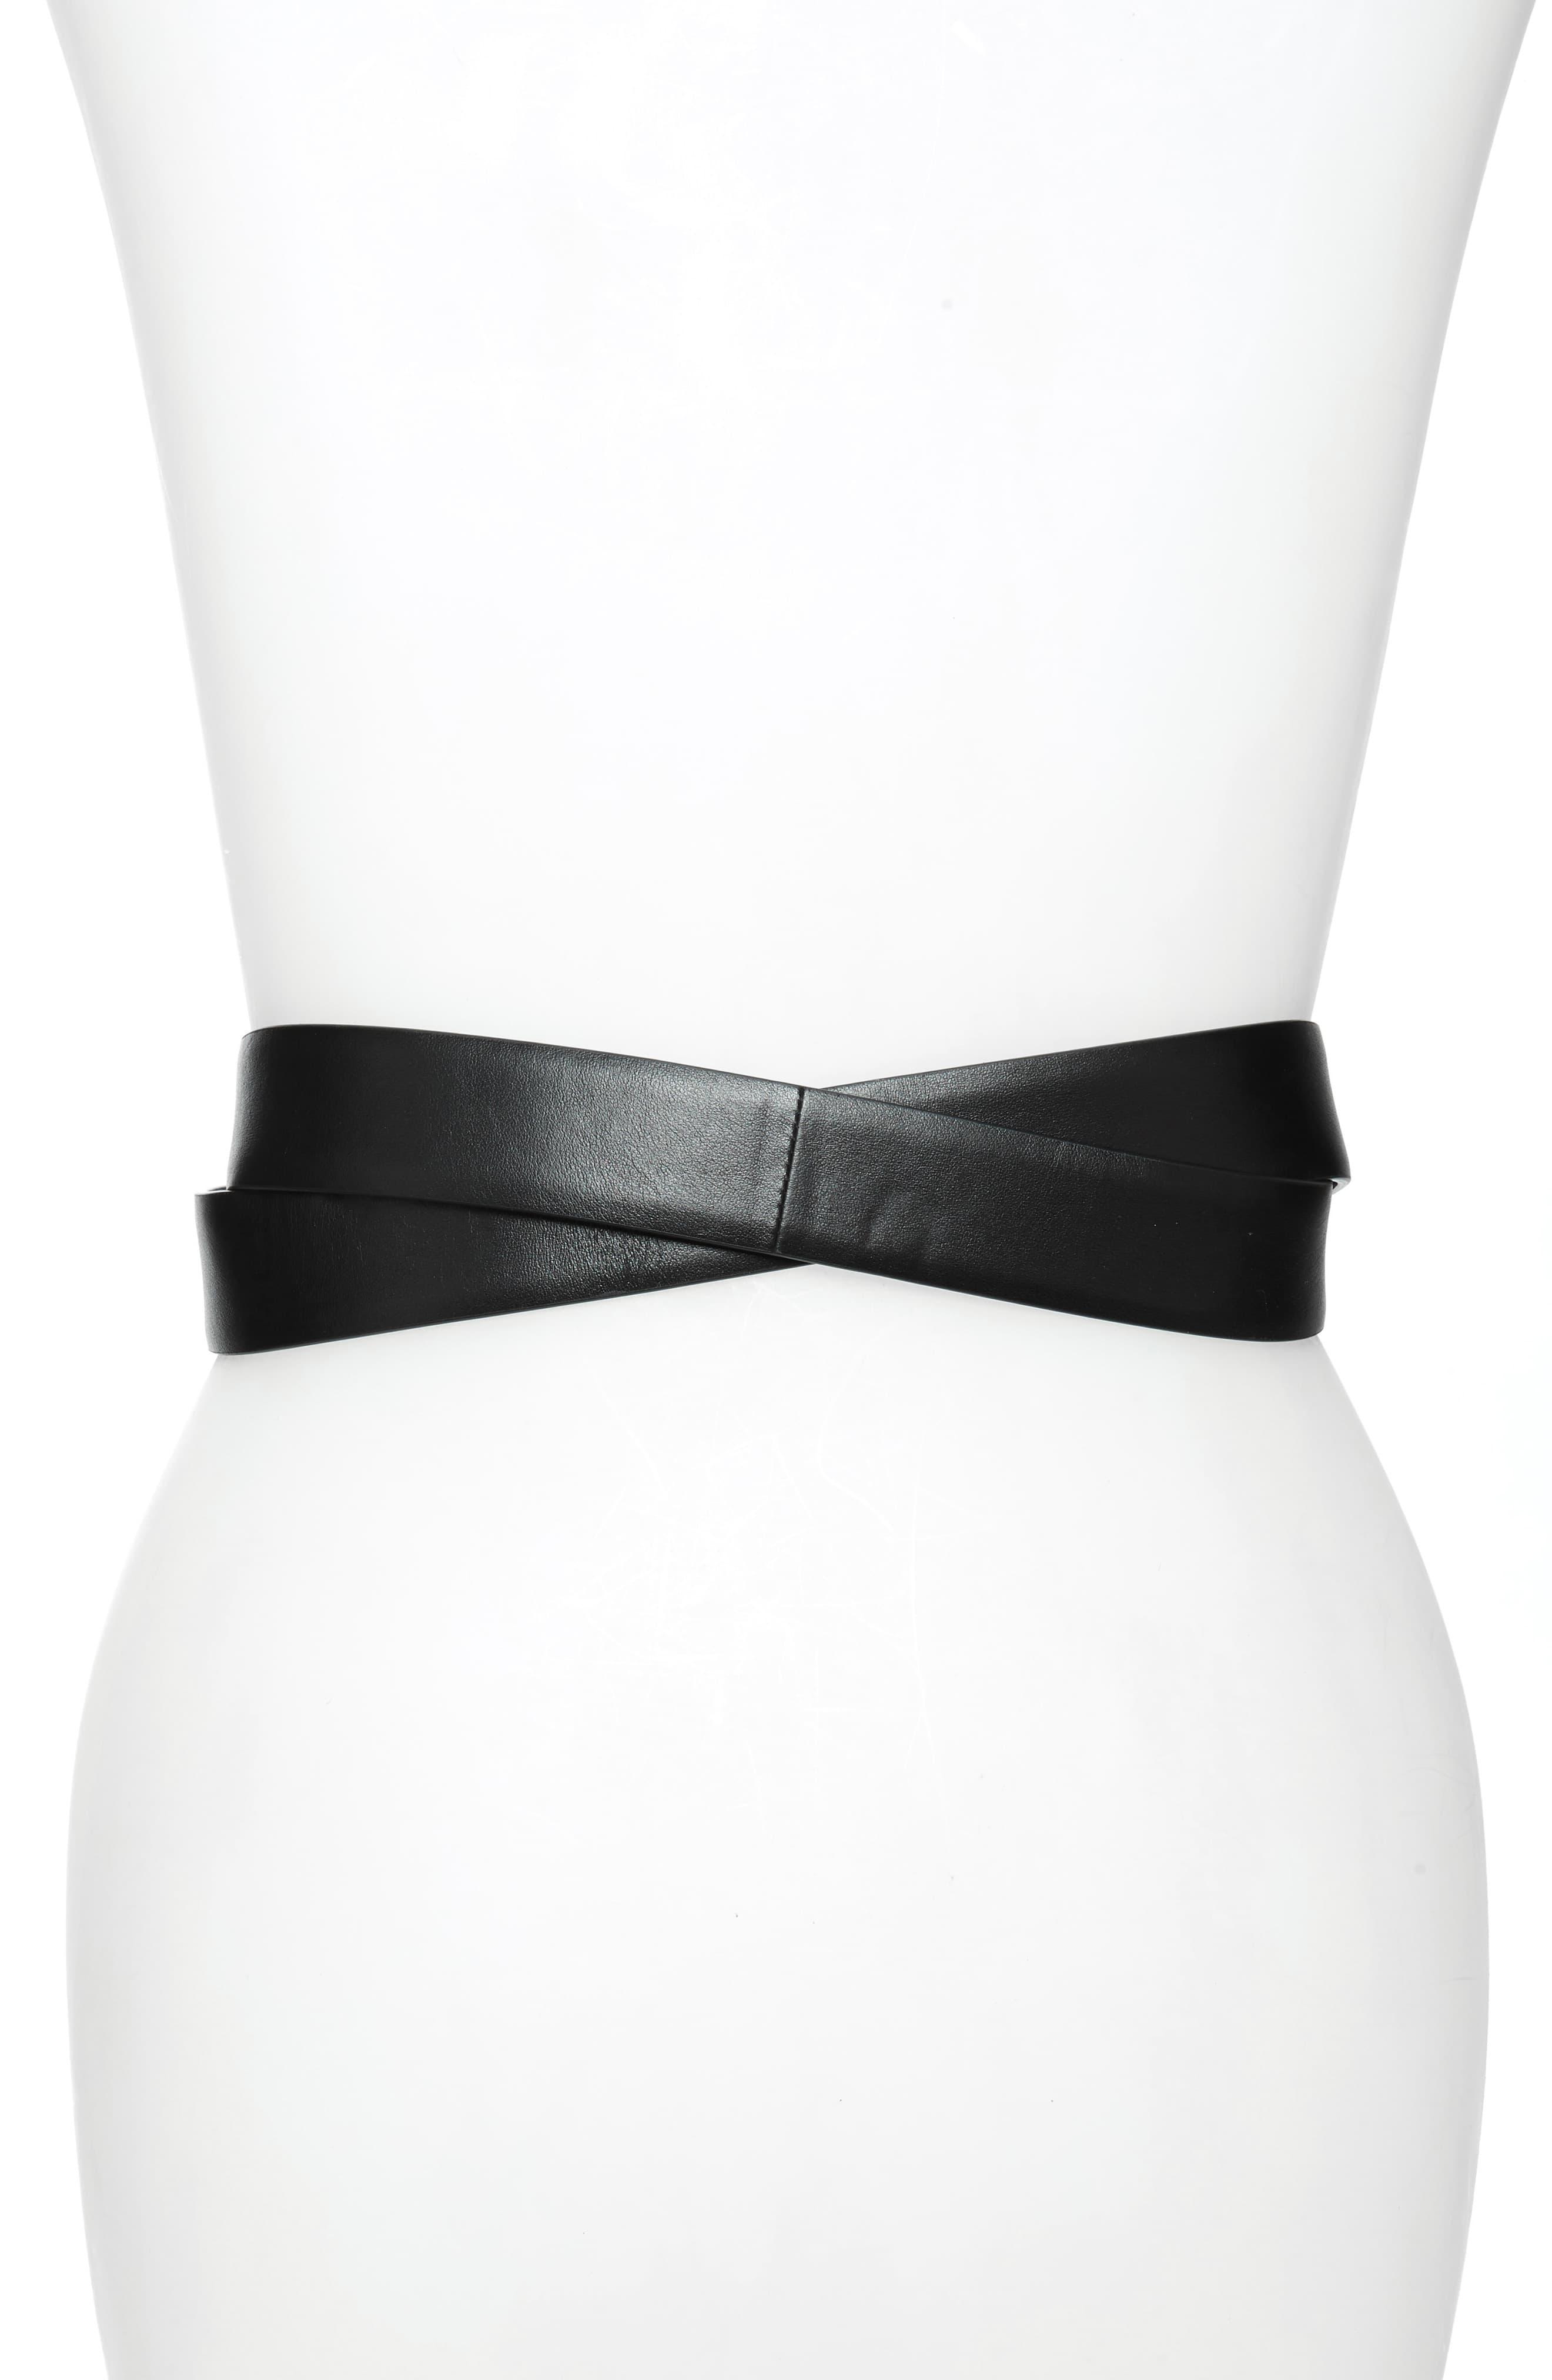 Prada City Double Wrap Reversible Leather Belt in Black - Lyst